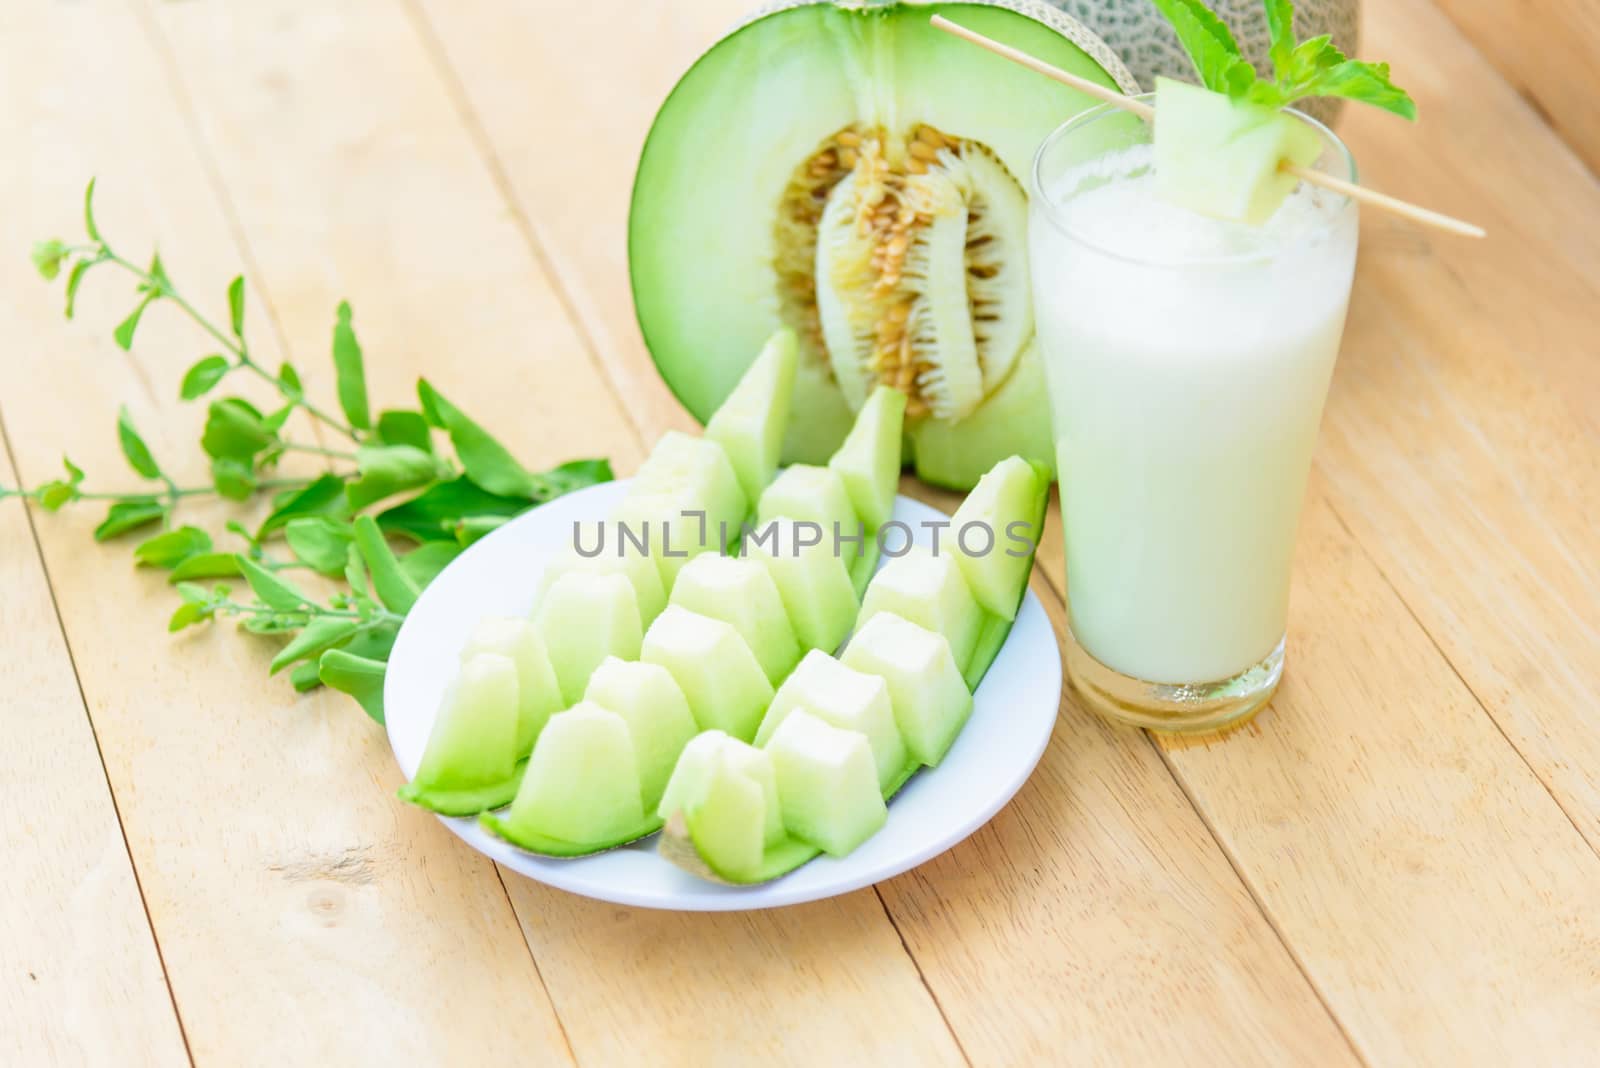 Fresh green melon on wood plate by rukawajung